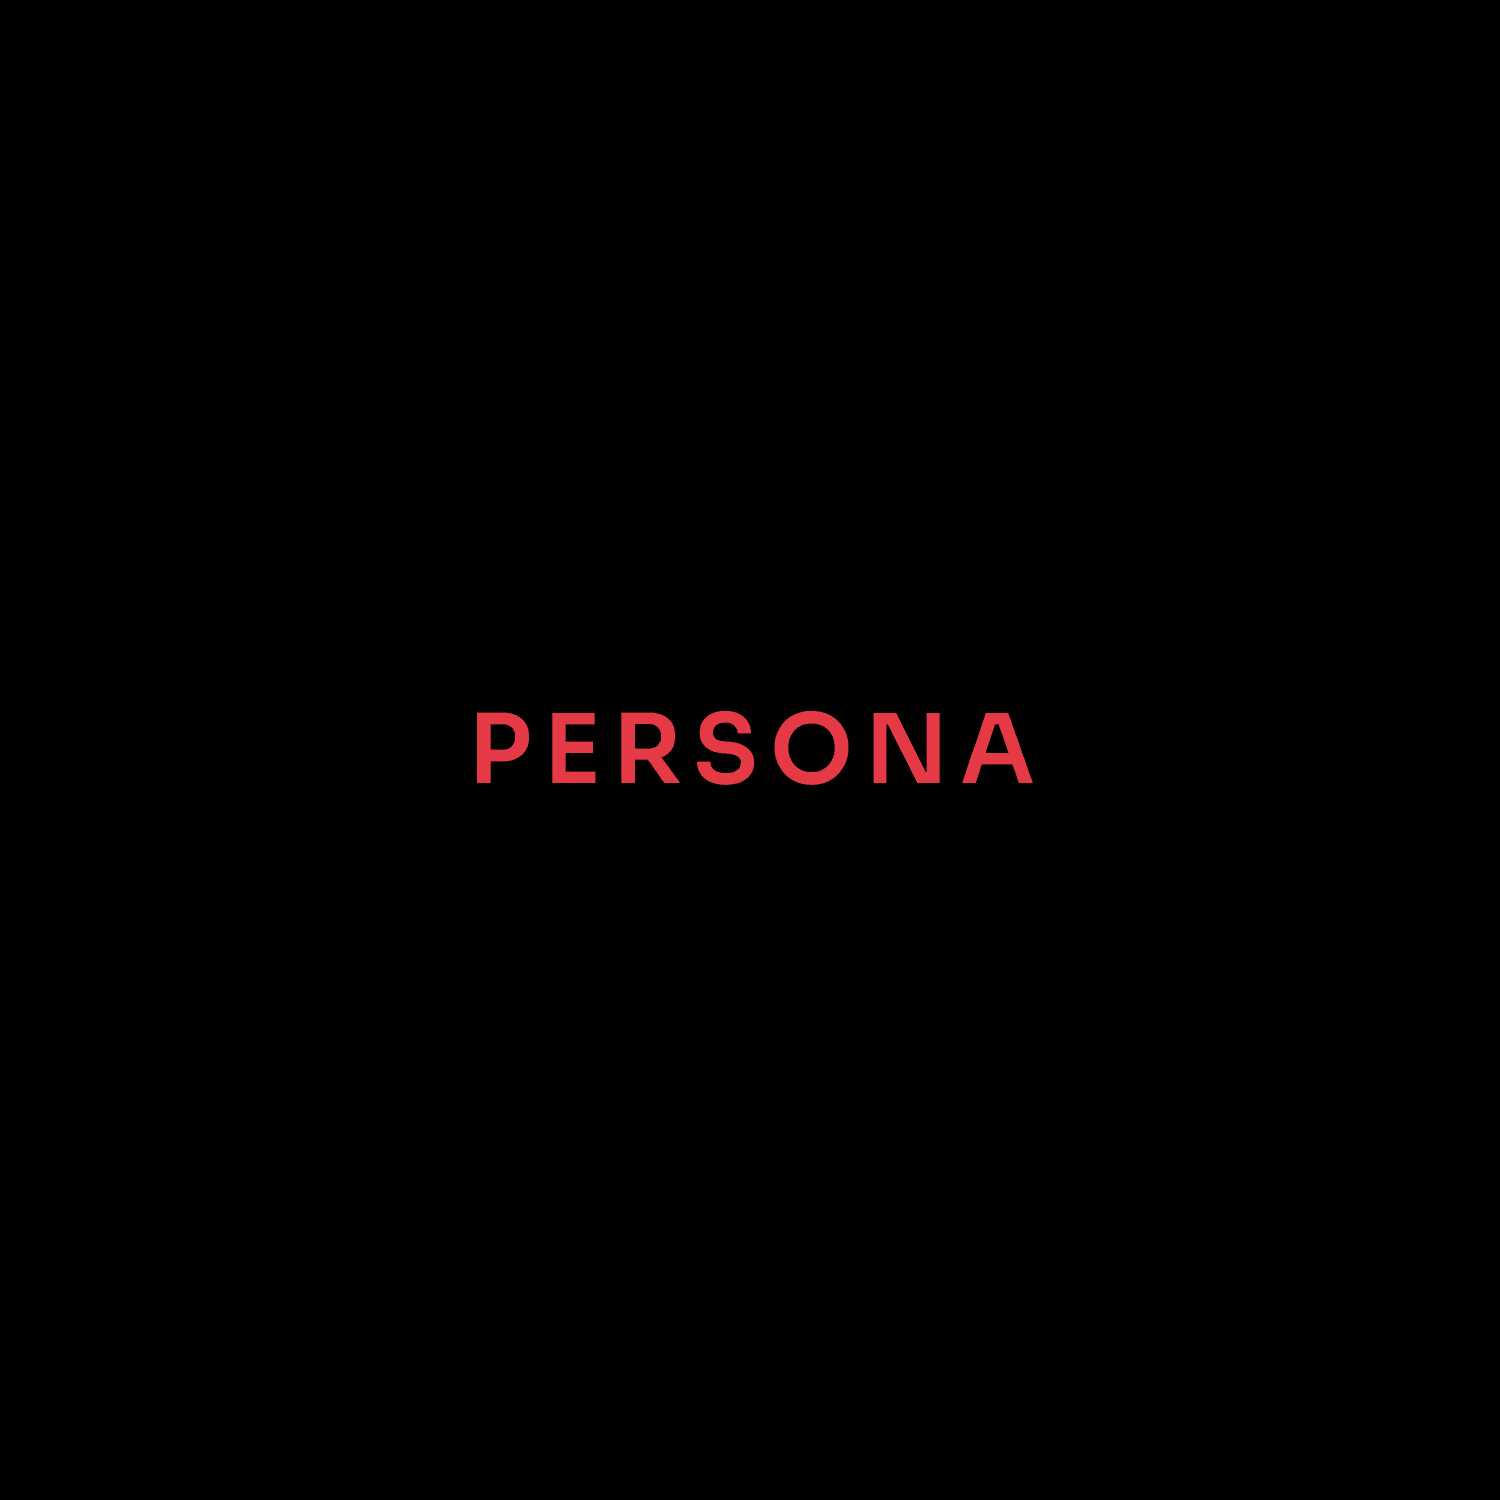 Persona3 banner